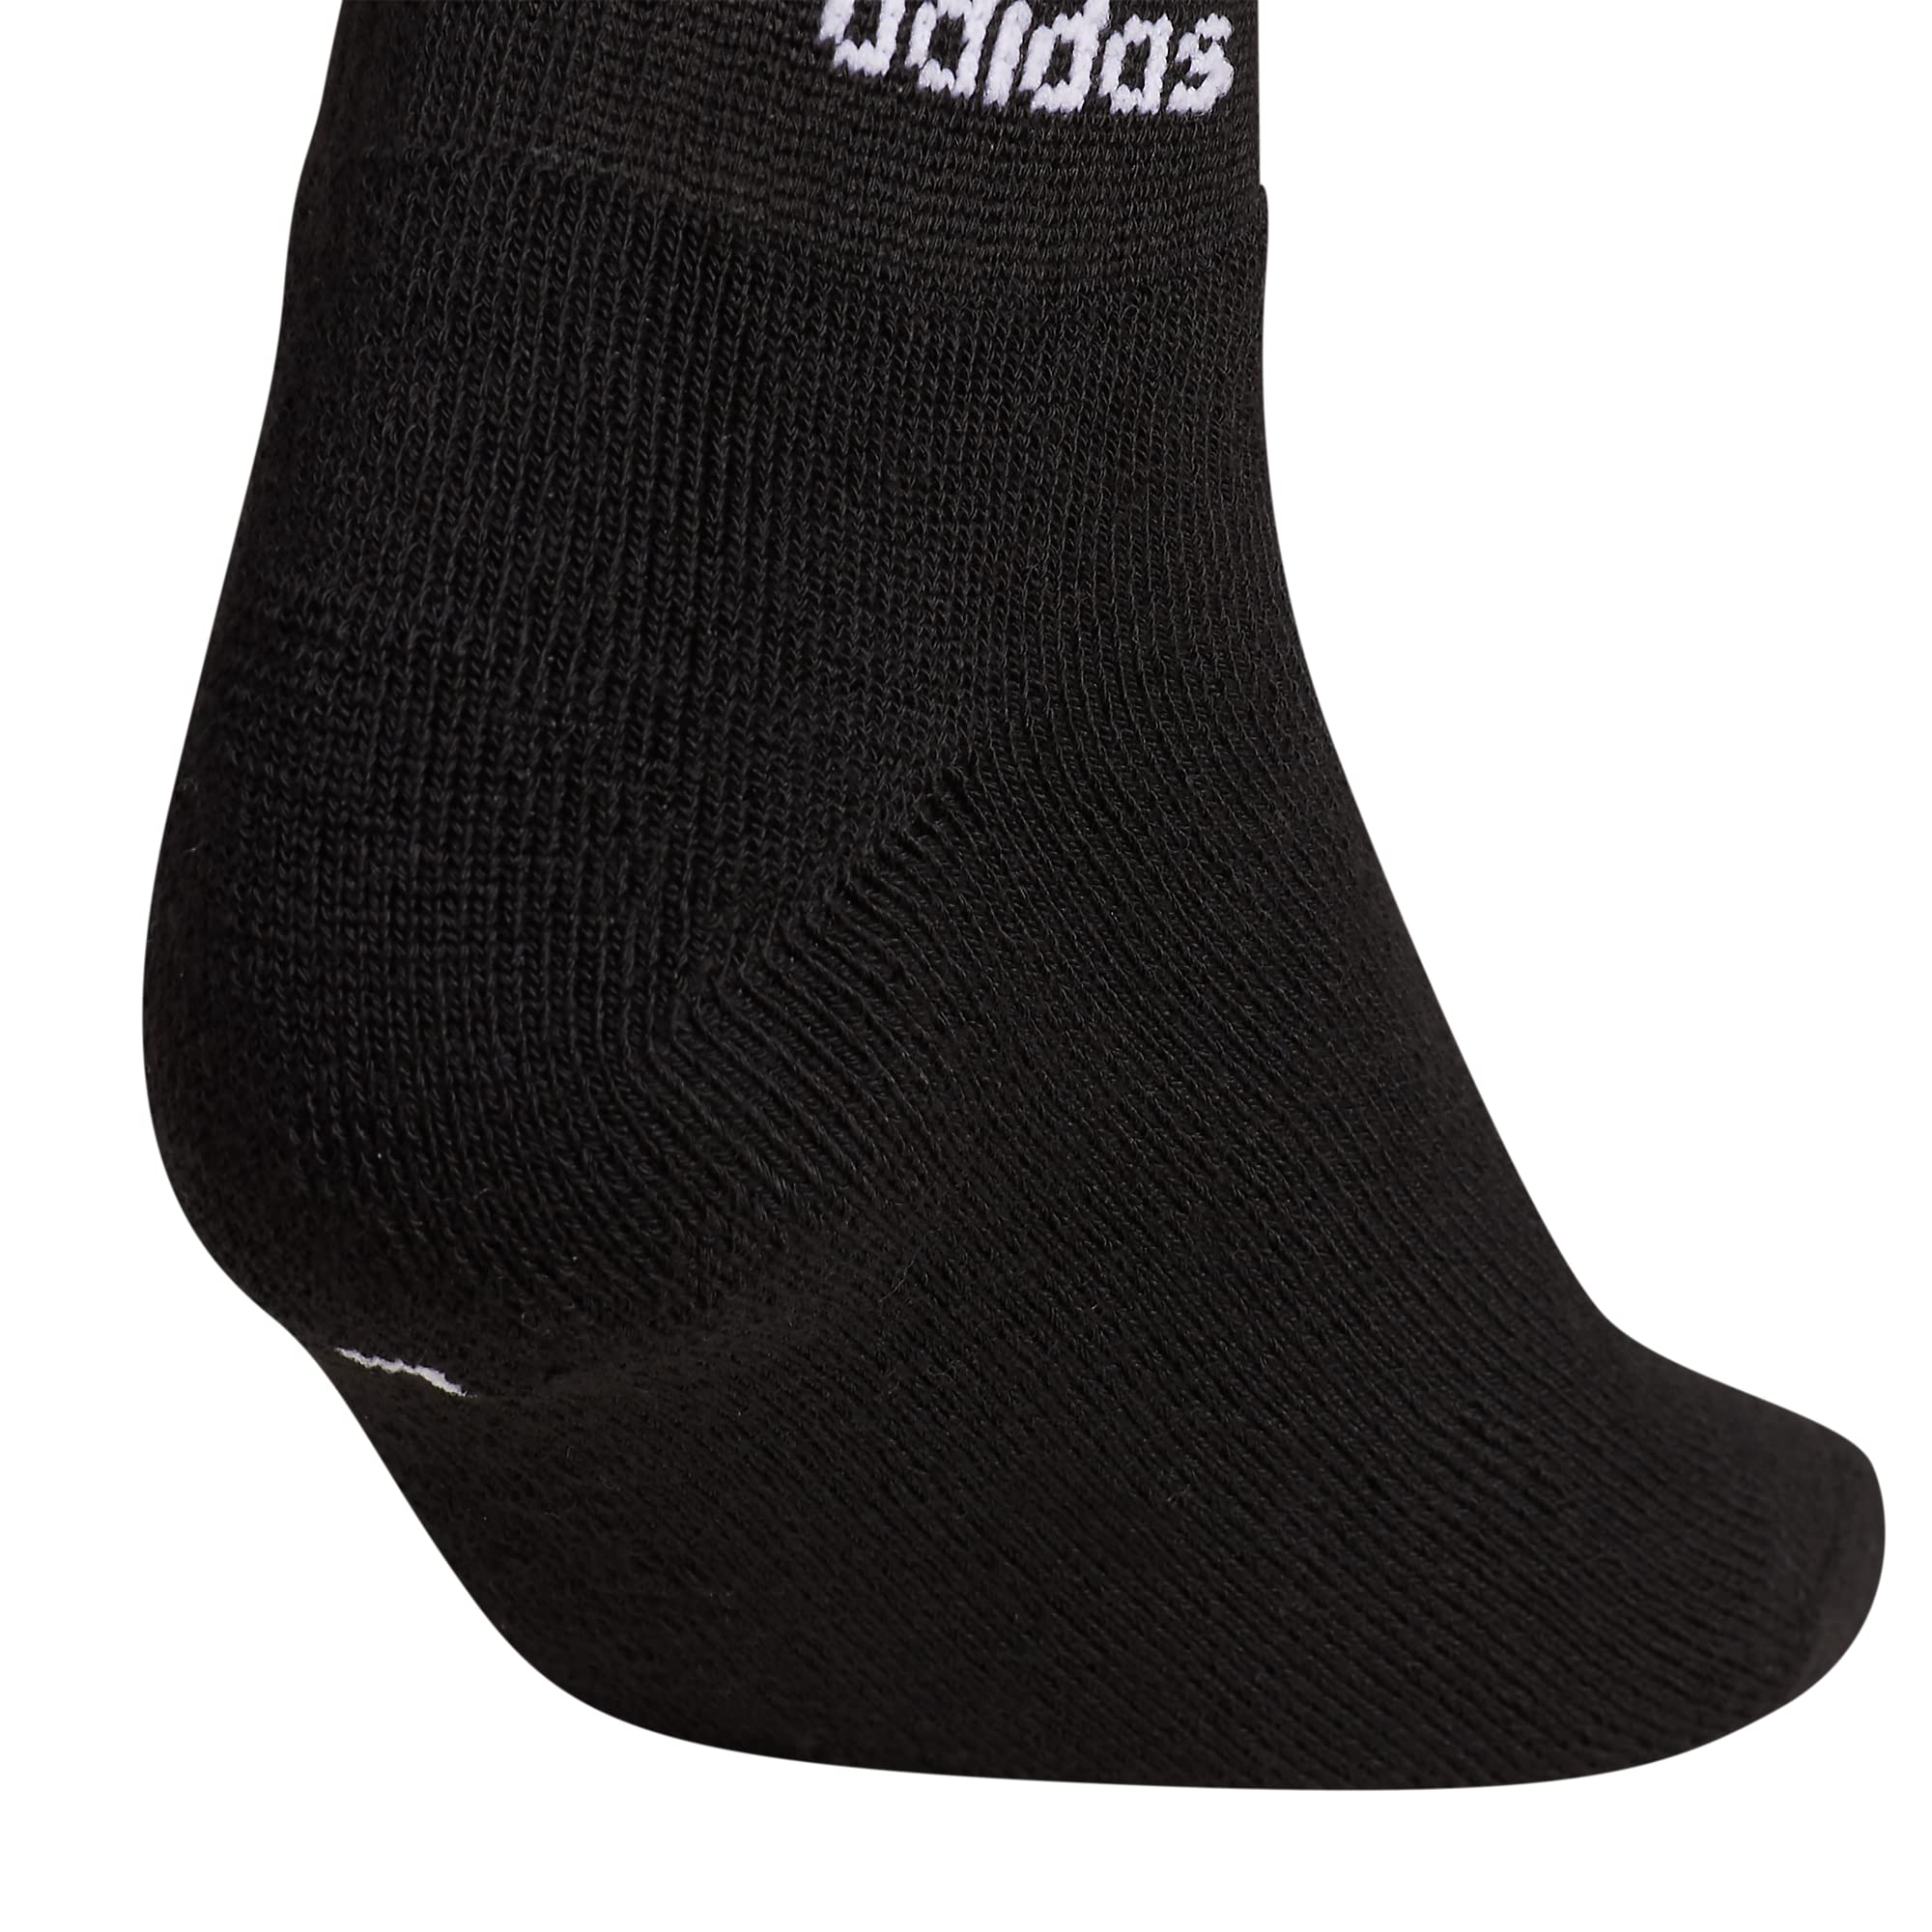 adidas Originals Kids-Boy's/Girl's Trefoil Cushioned Quarter Socks (6-Pair), White/Black, Large